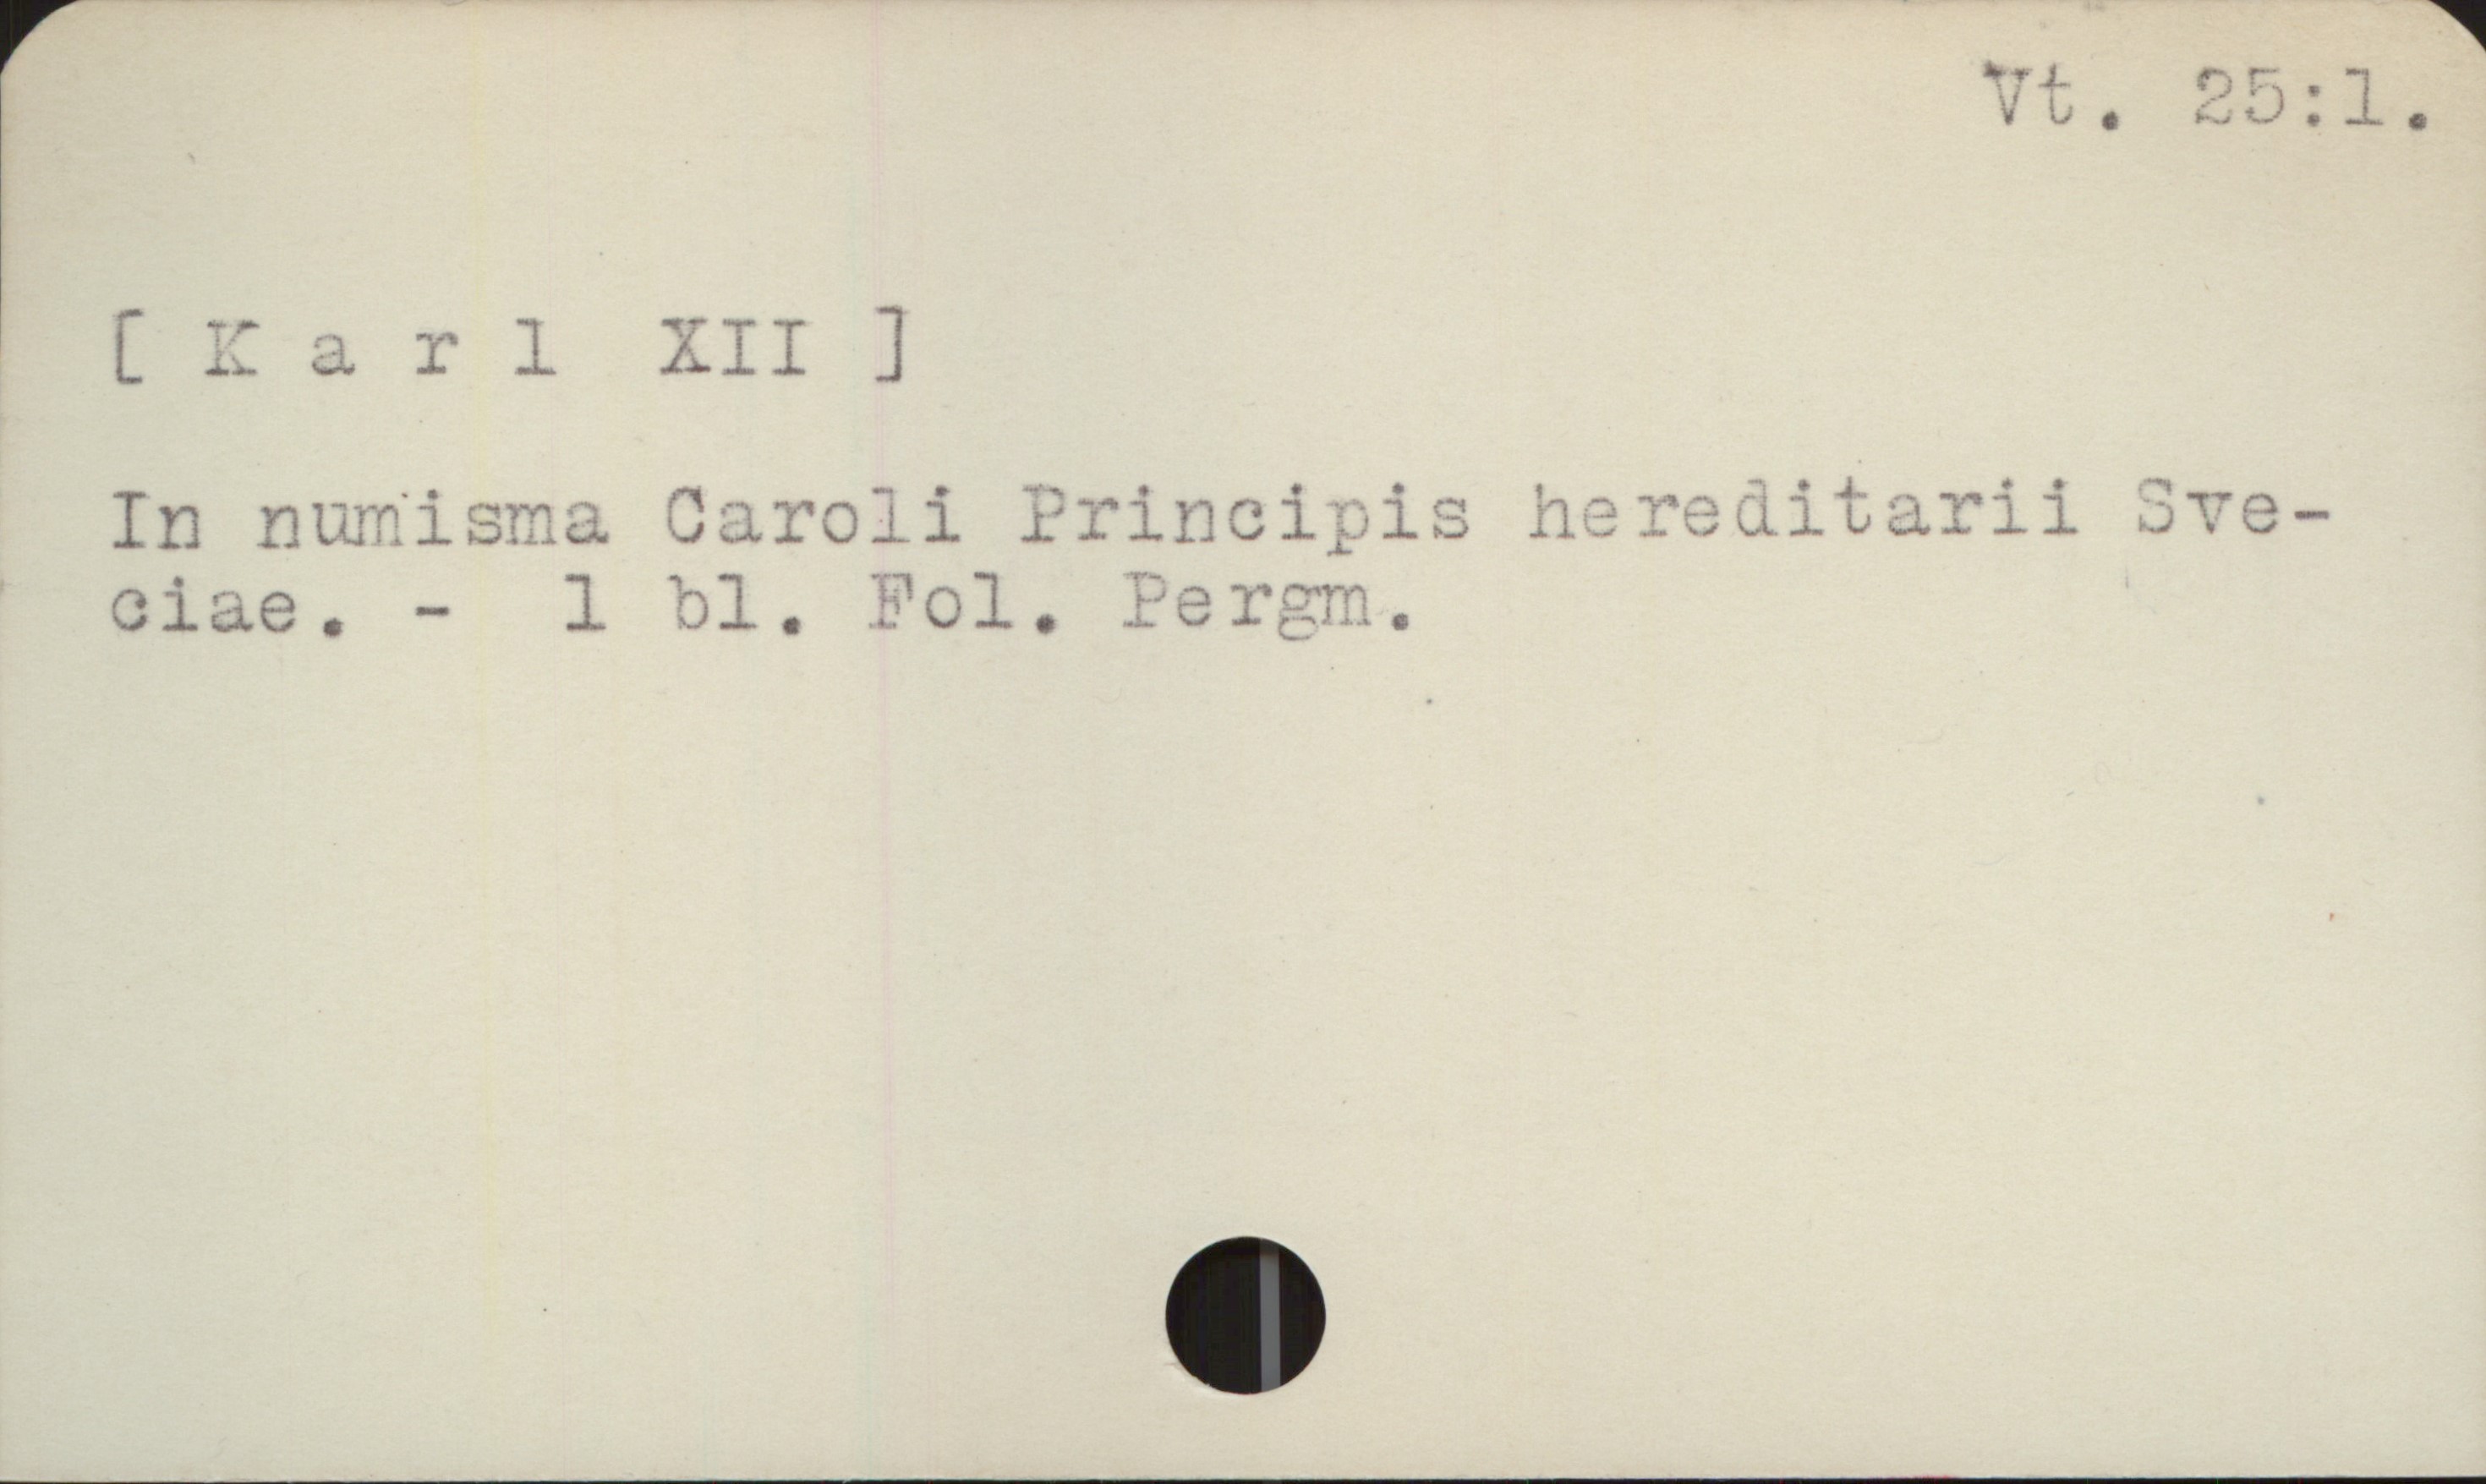  Vt, 55:2.
( 17 a r l XII ]
In numisma Caroli Principis heveoditarii Jve-
ciae. - 1 bl. Pol, vrergm.

